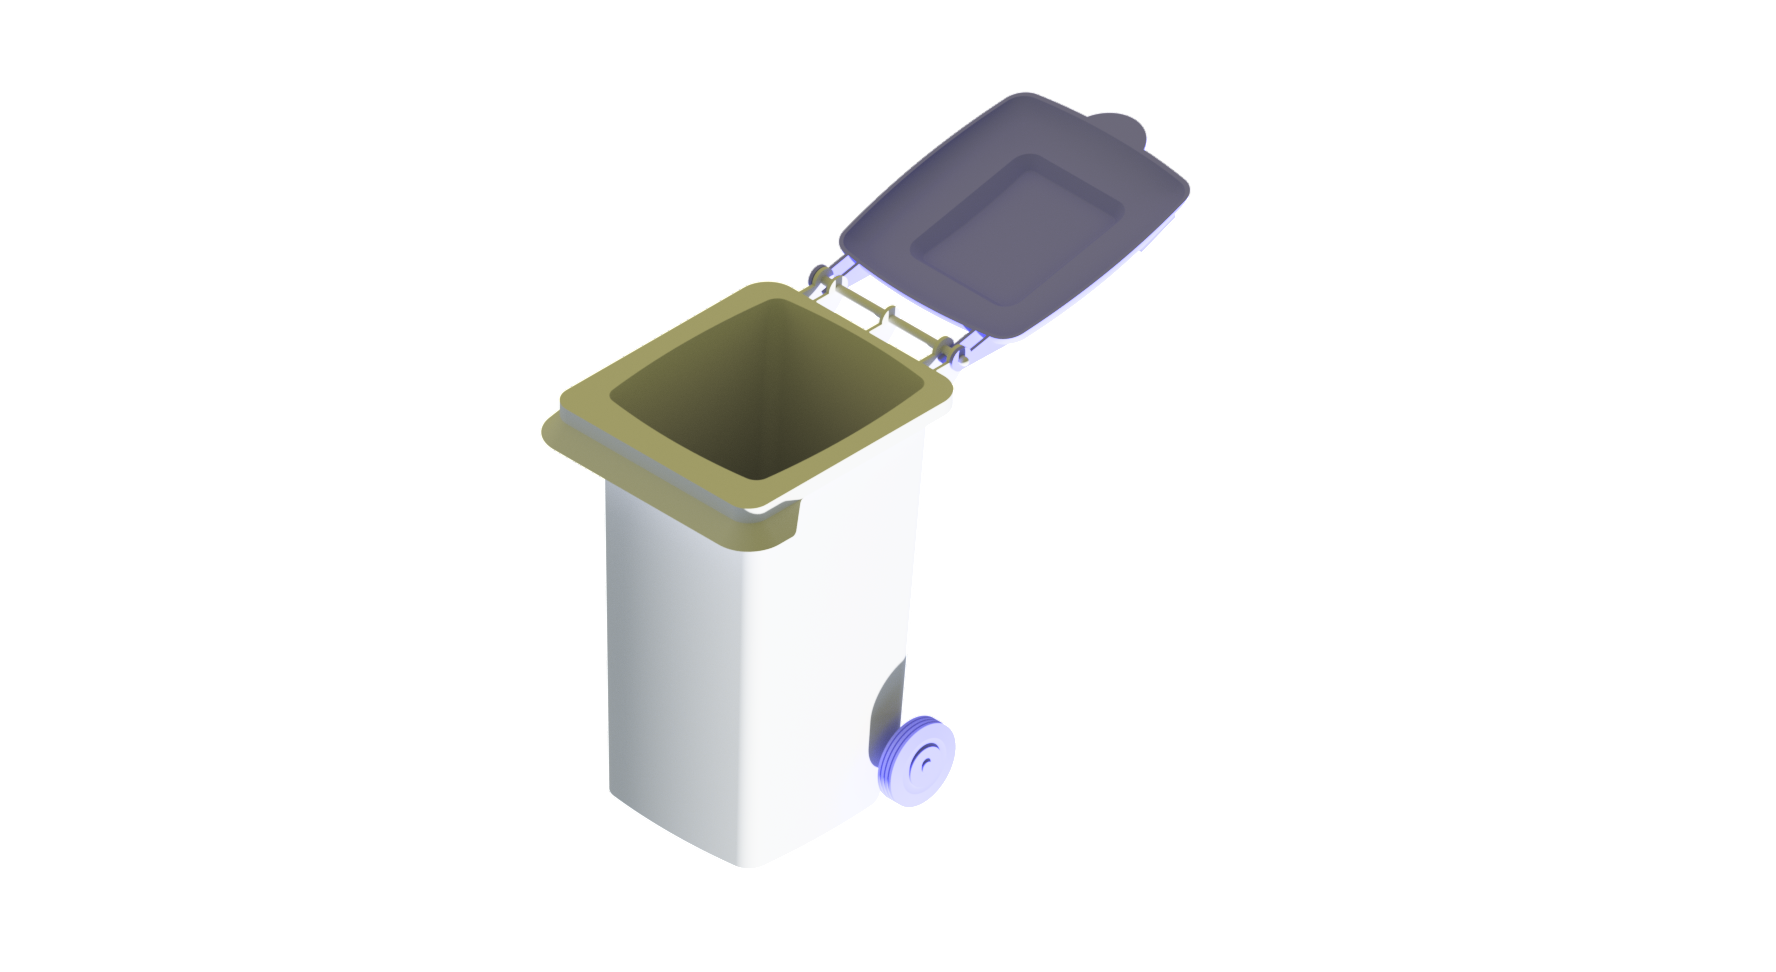 Toy trash can and pen holder 3d printer model 3D print model